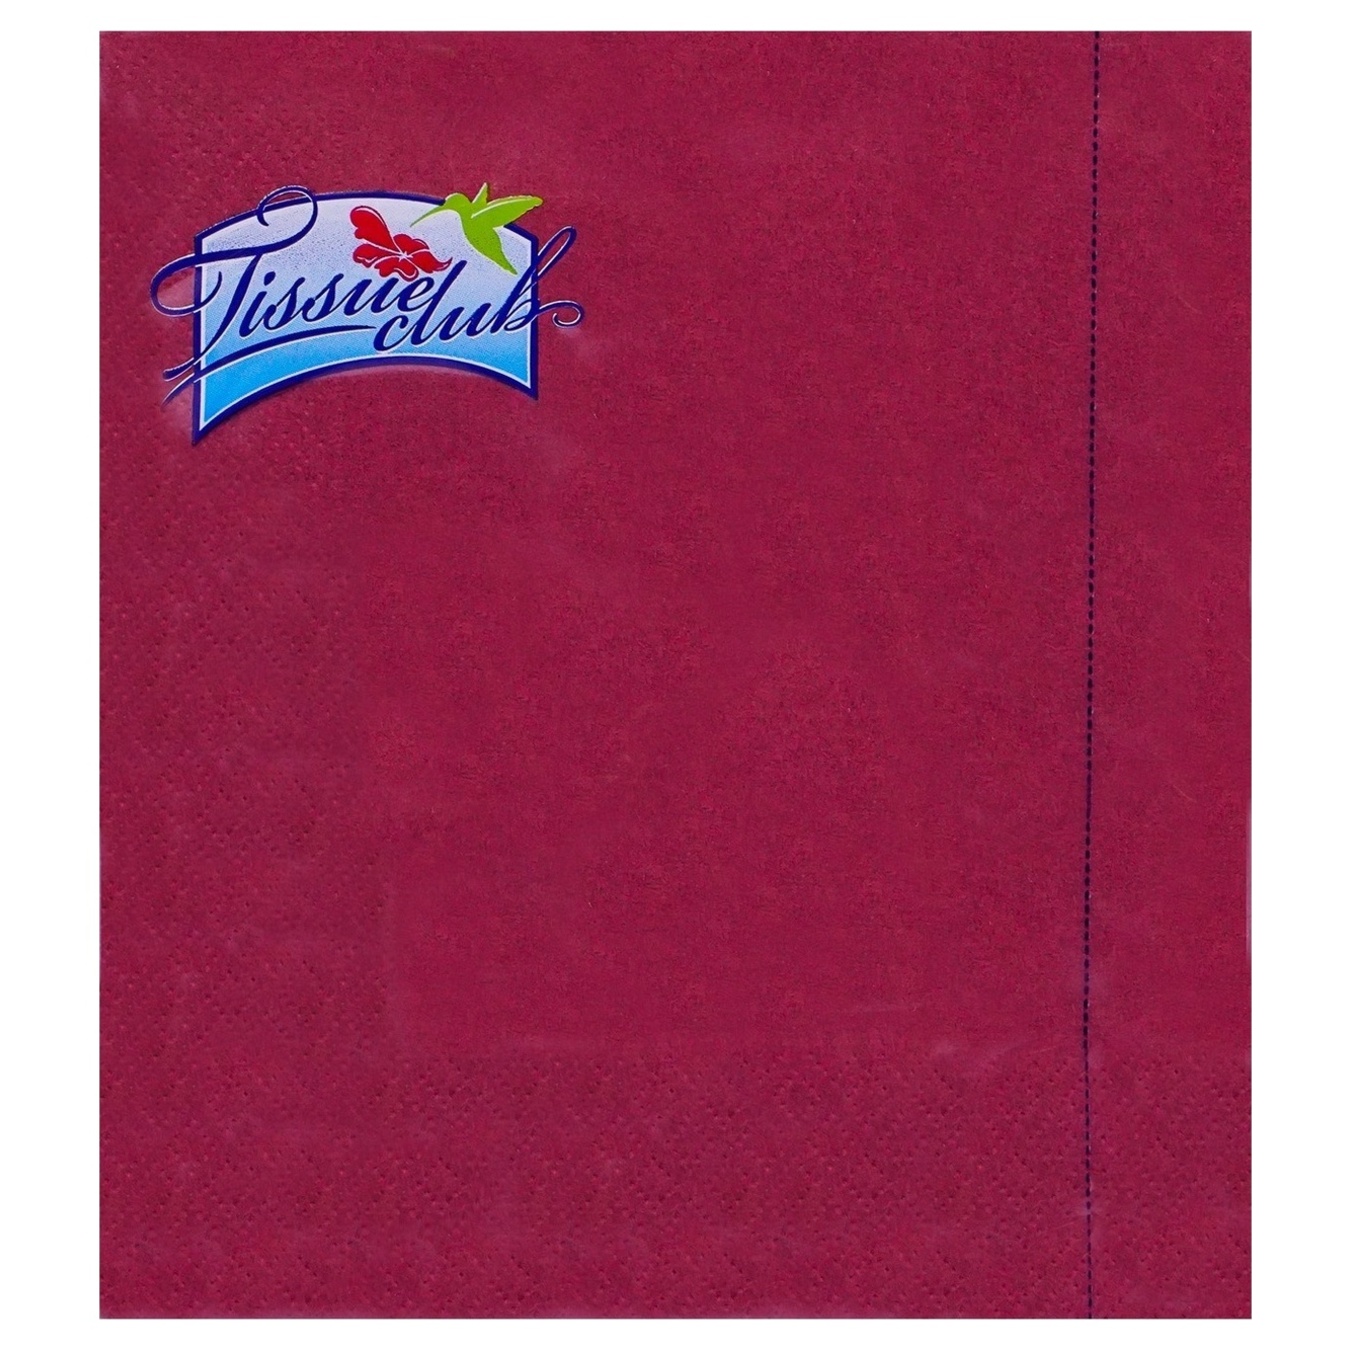 Paper napkins Tissueclub burgundy three-layer 33x33 cm 20pcs